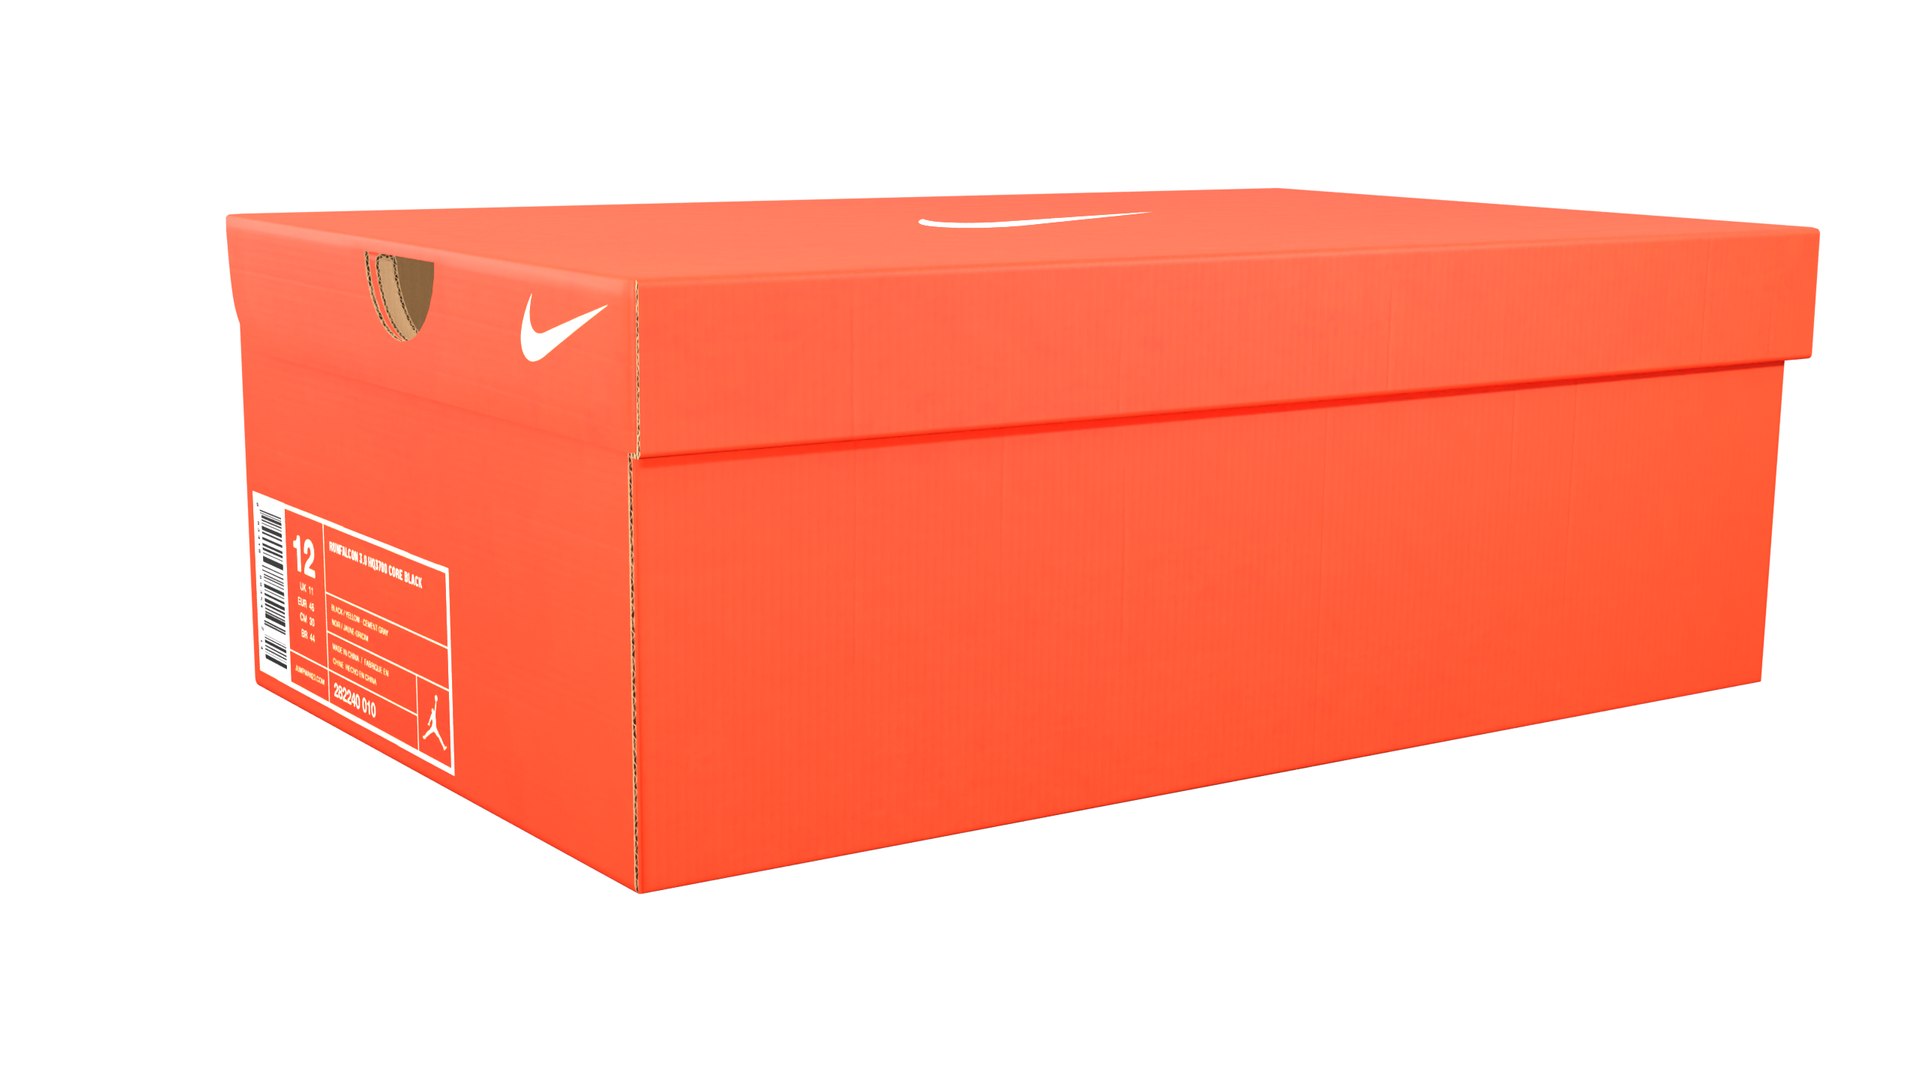 Nike Orange Shoe Box 3D Model - TurboSquid 2161057